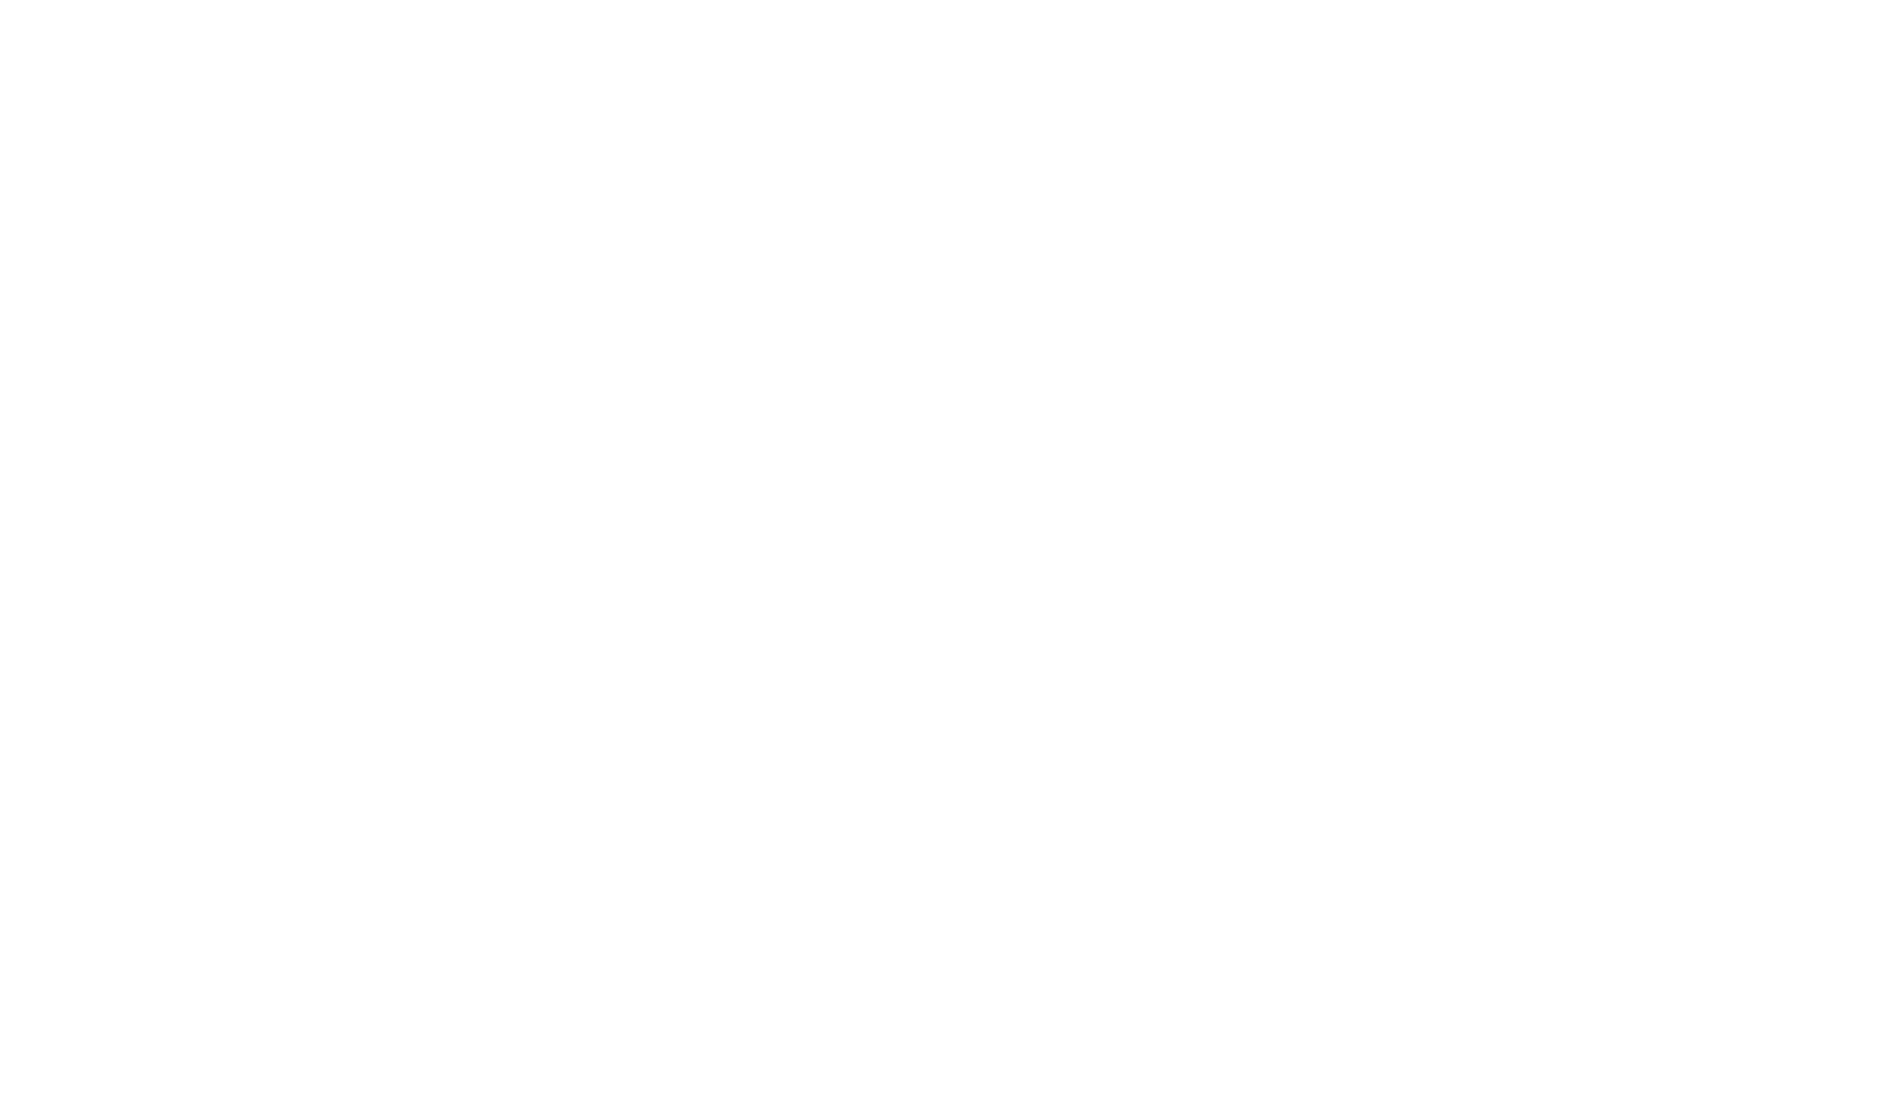 Les fabricants - logo client franprix